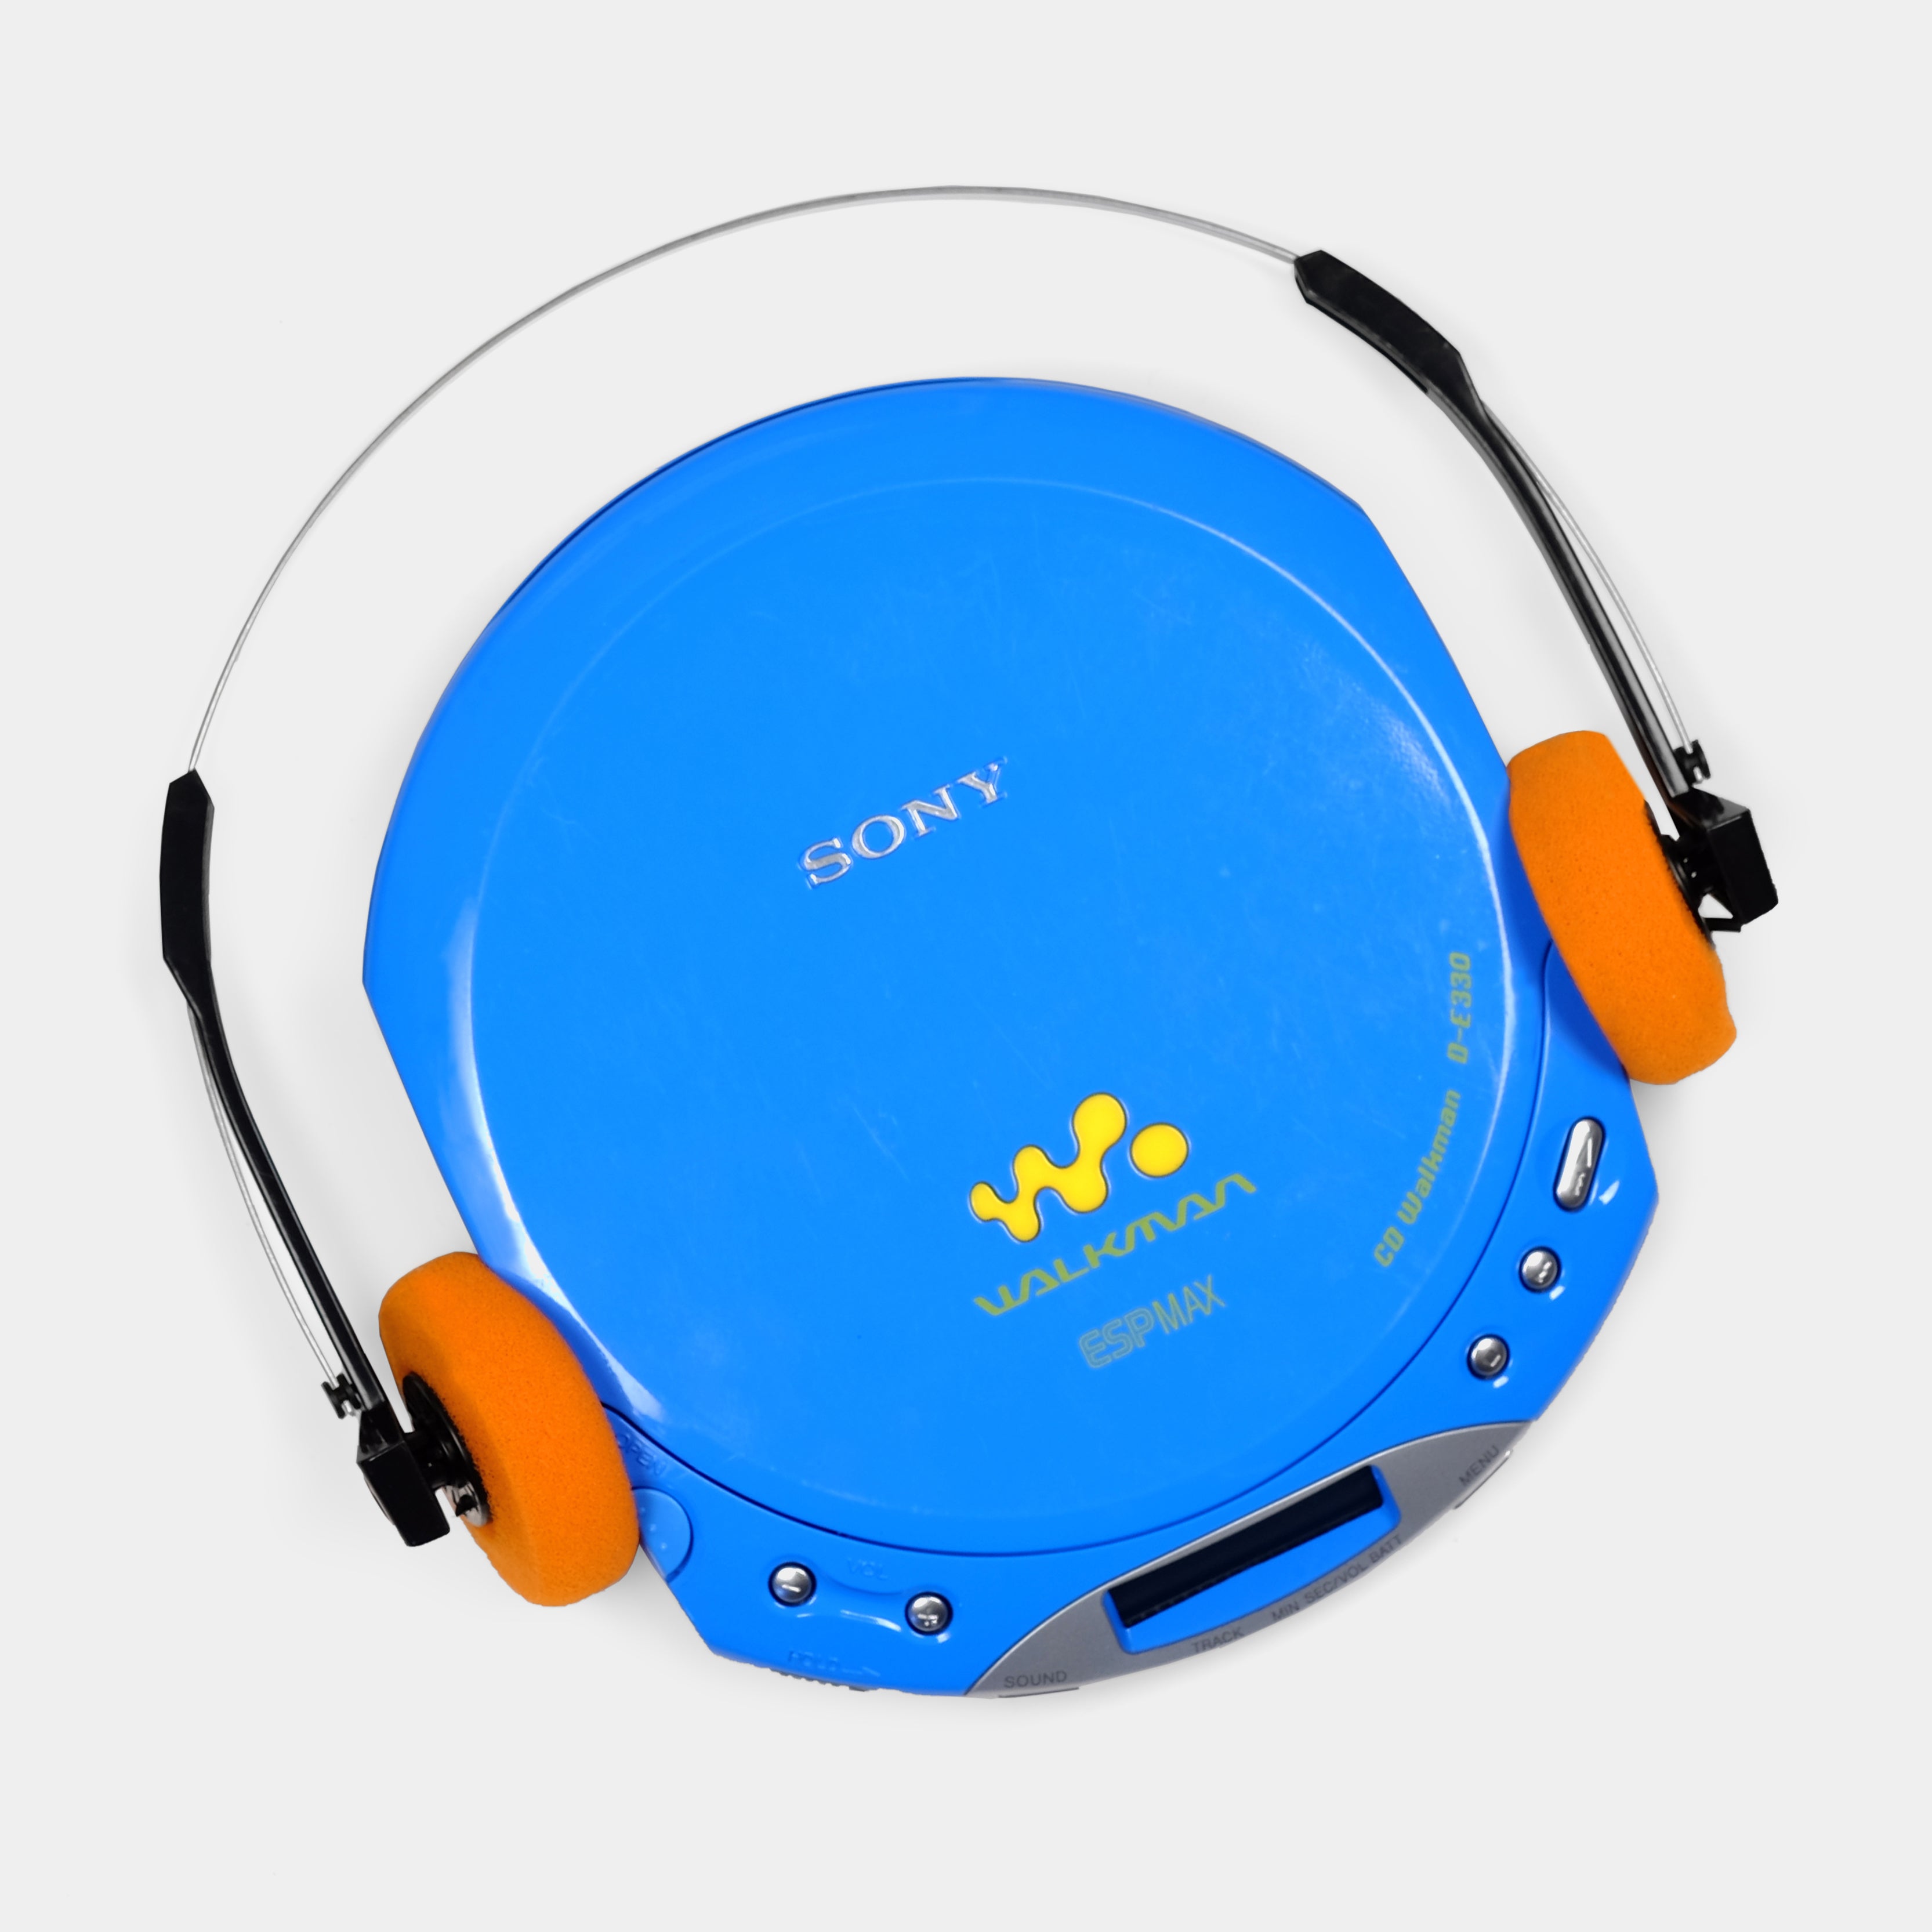 Sony Walkman D-E330 Blue Portable CD Player